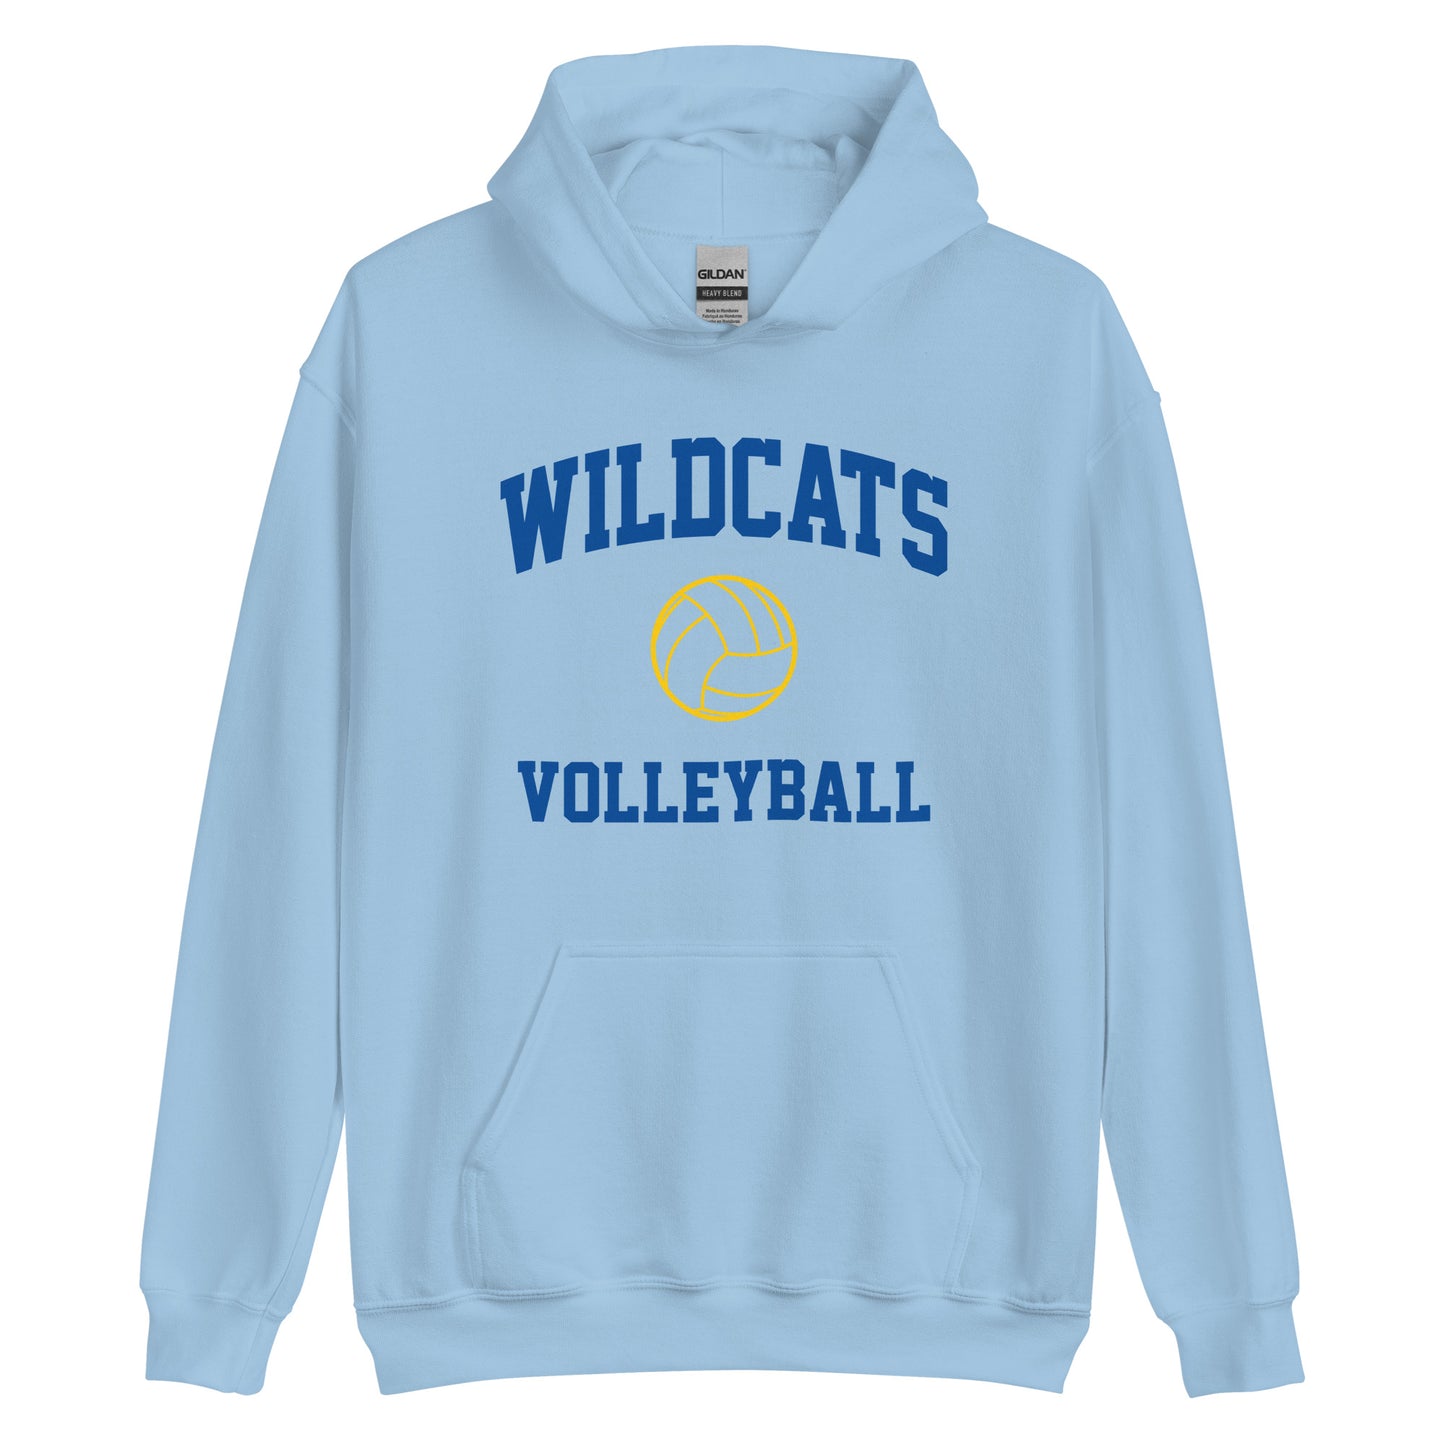 Wildcats Volleyball Unisex Hoodie